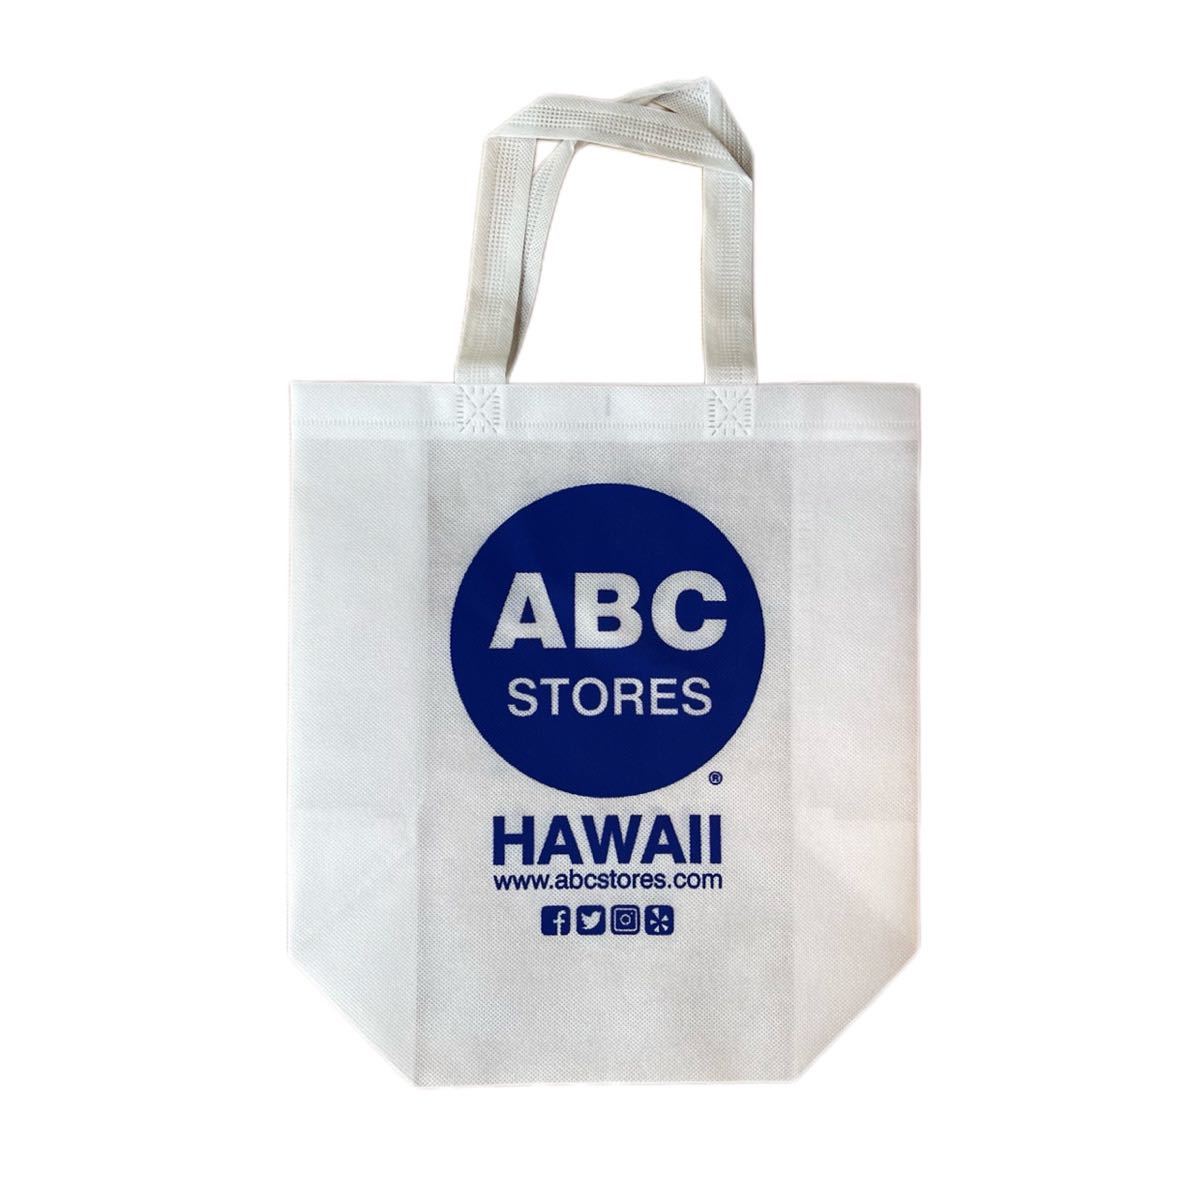 ABC STORE eko-bag F33 Hawaii eko back usdm jdm hdm Hawaii miscellaneous goods America miscellaneous goods american miscellaneous goods tote bag shopping bag 